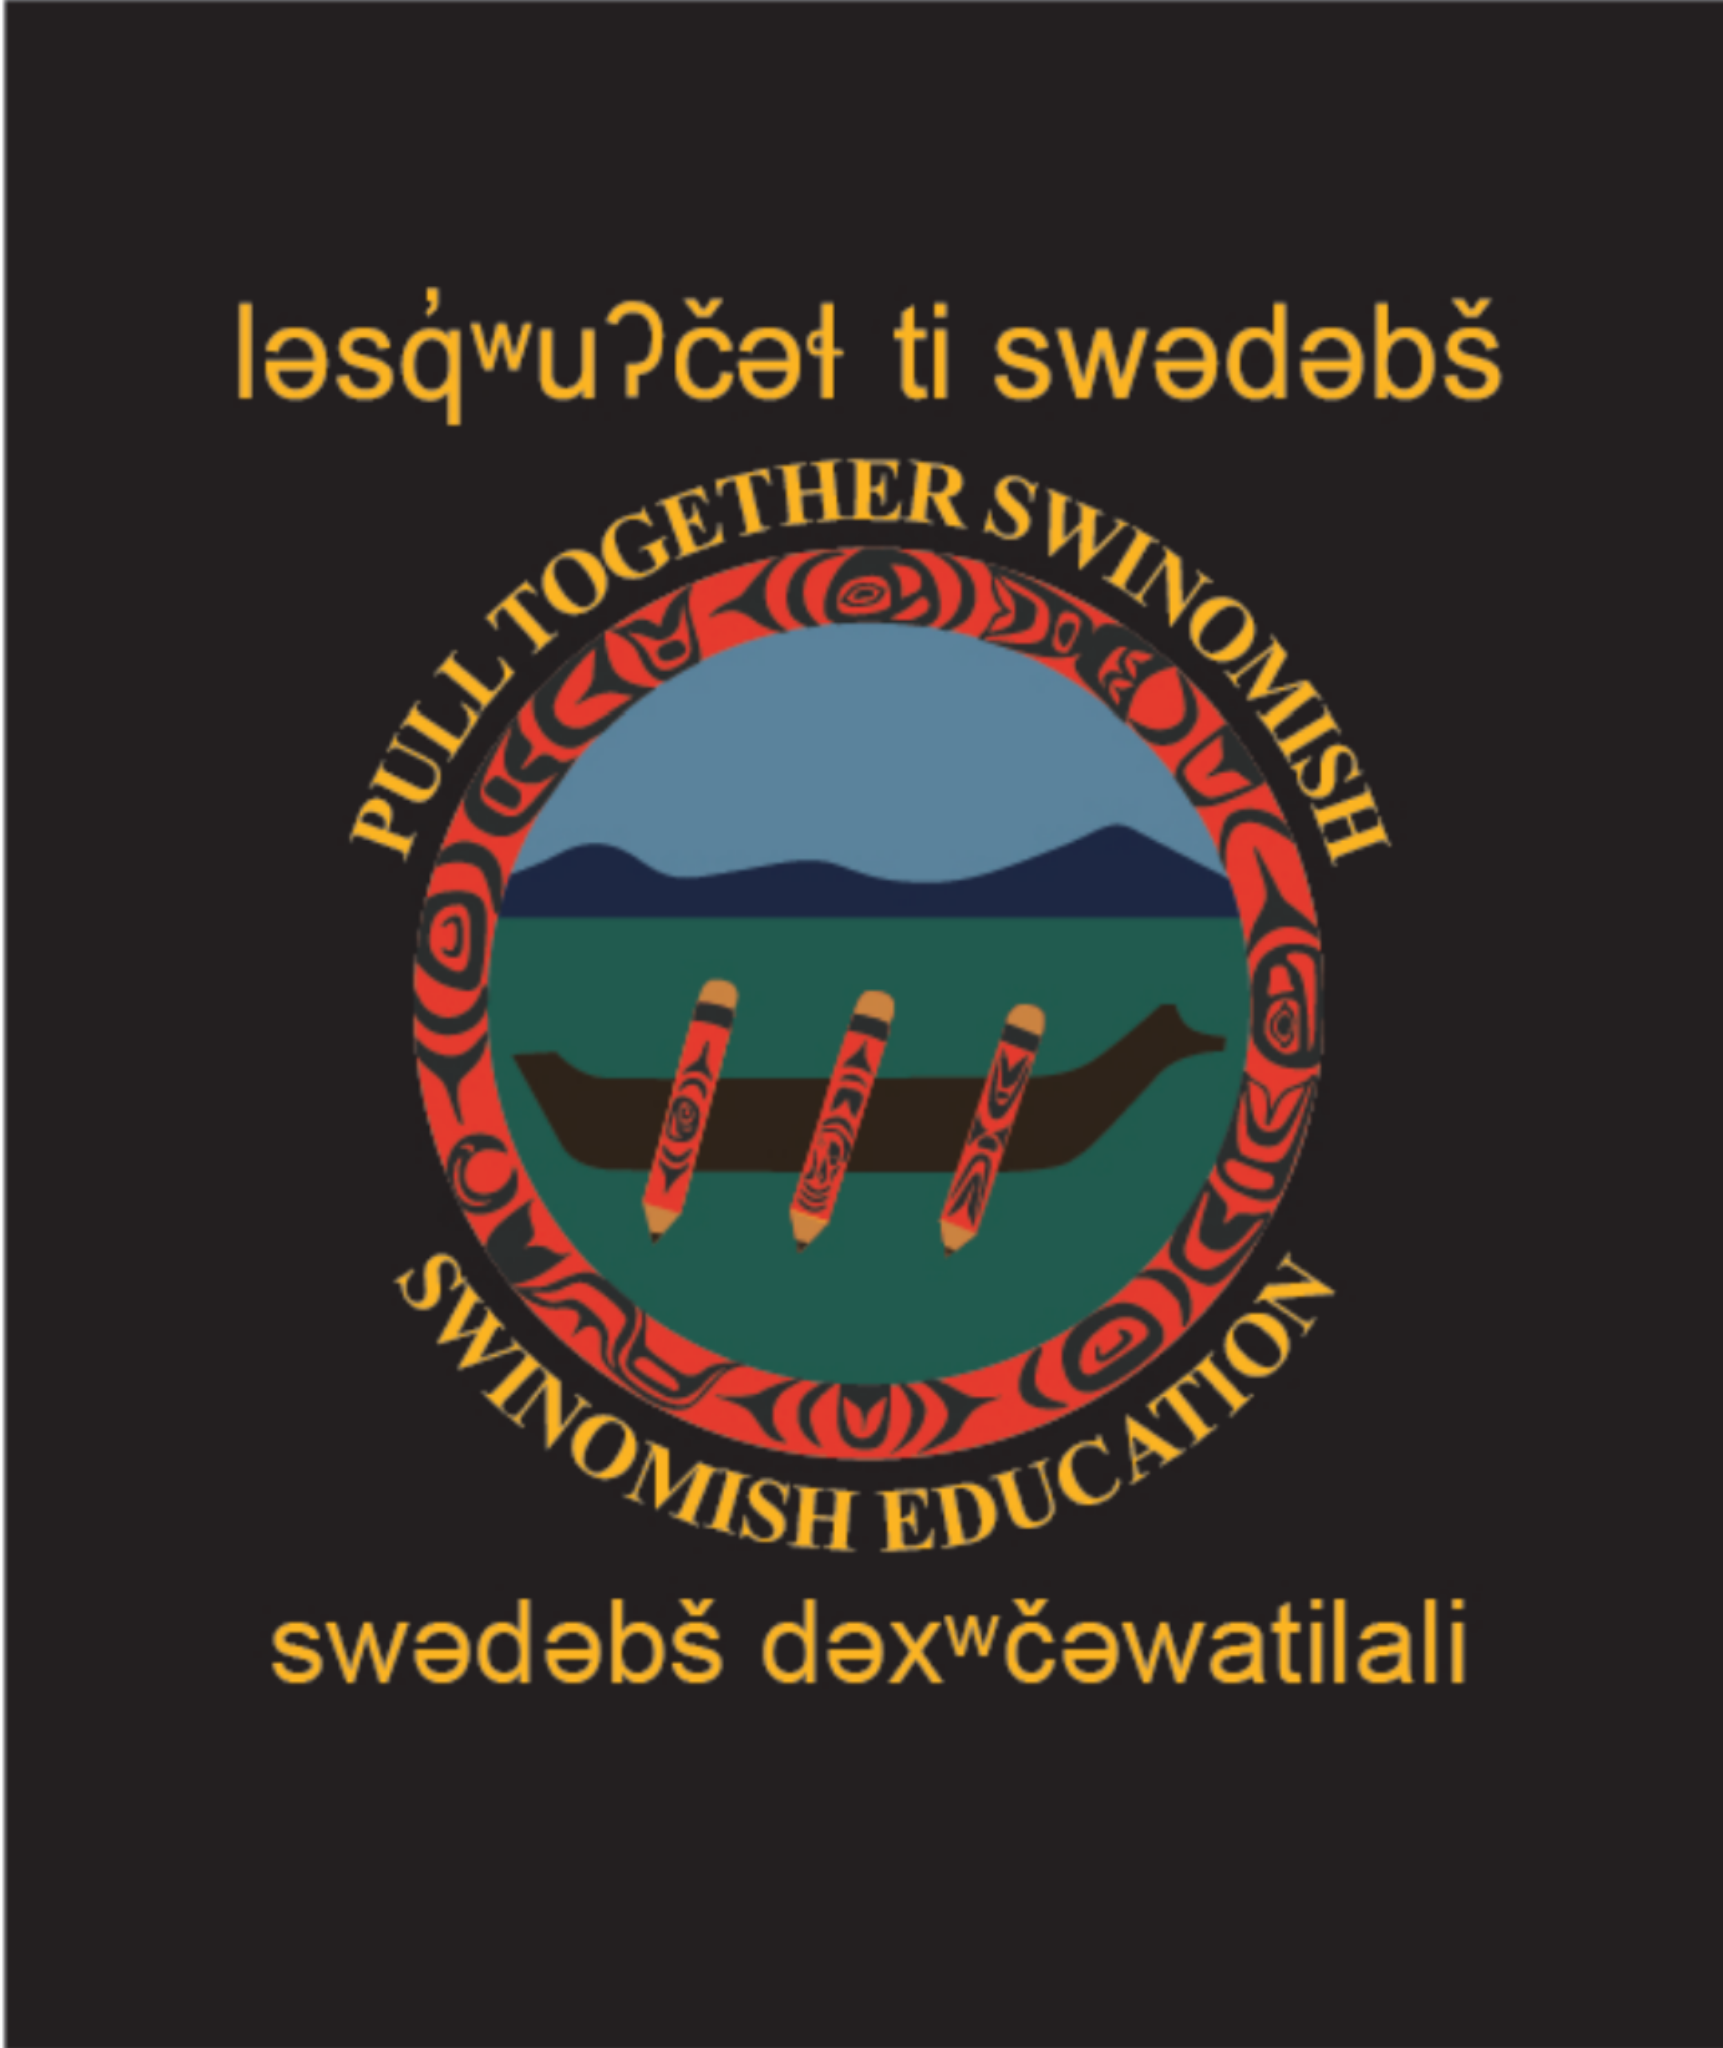 Pull Together Swinomish, Swinomish Education Logo